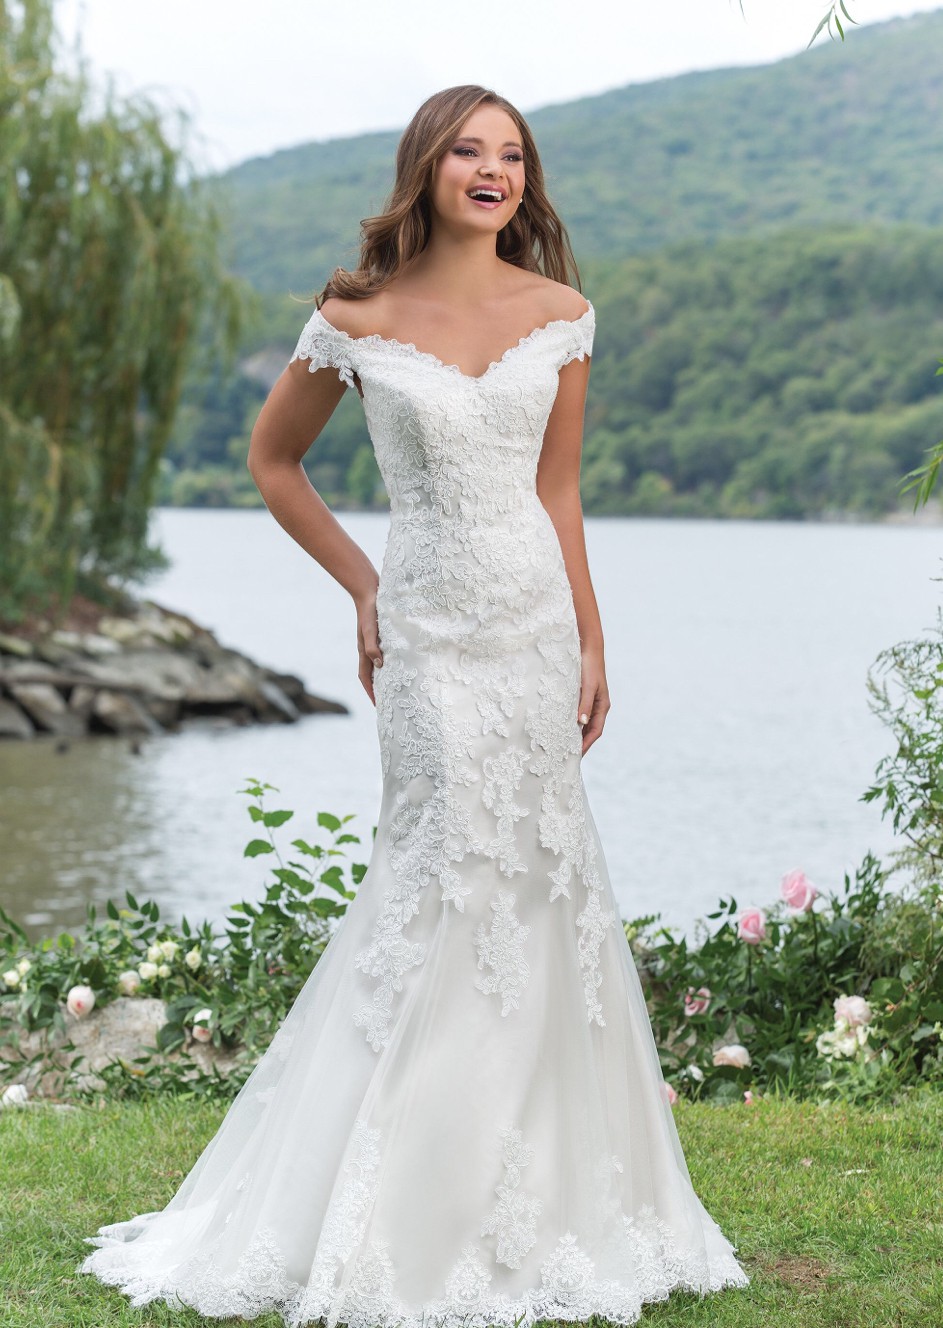 Sweetheart Gowns Sample Wedding Dress Save 58% - Stillwhite